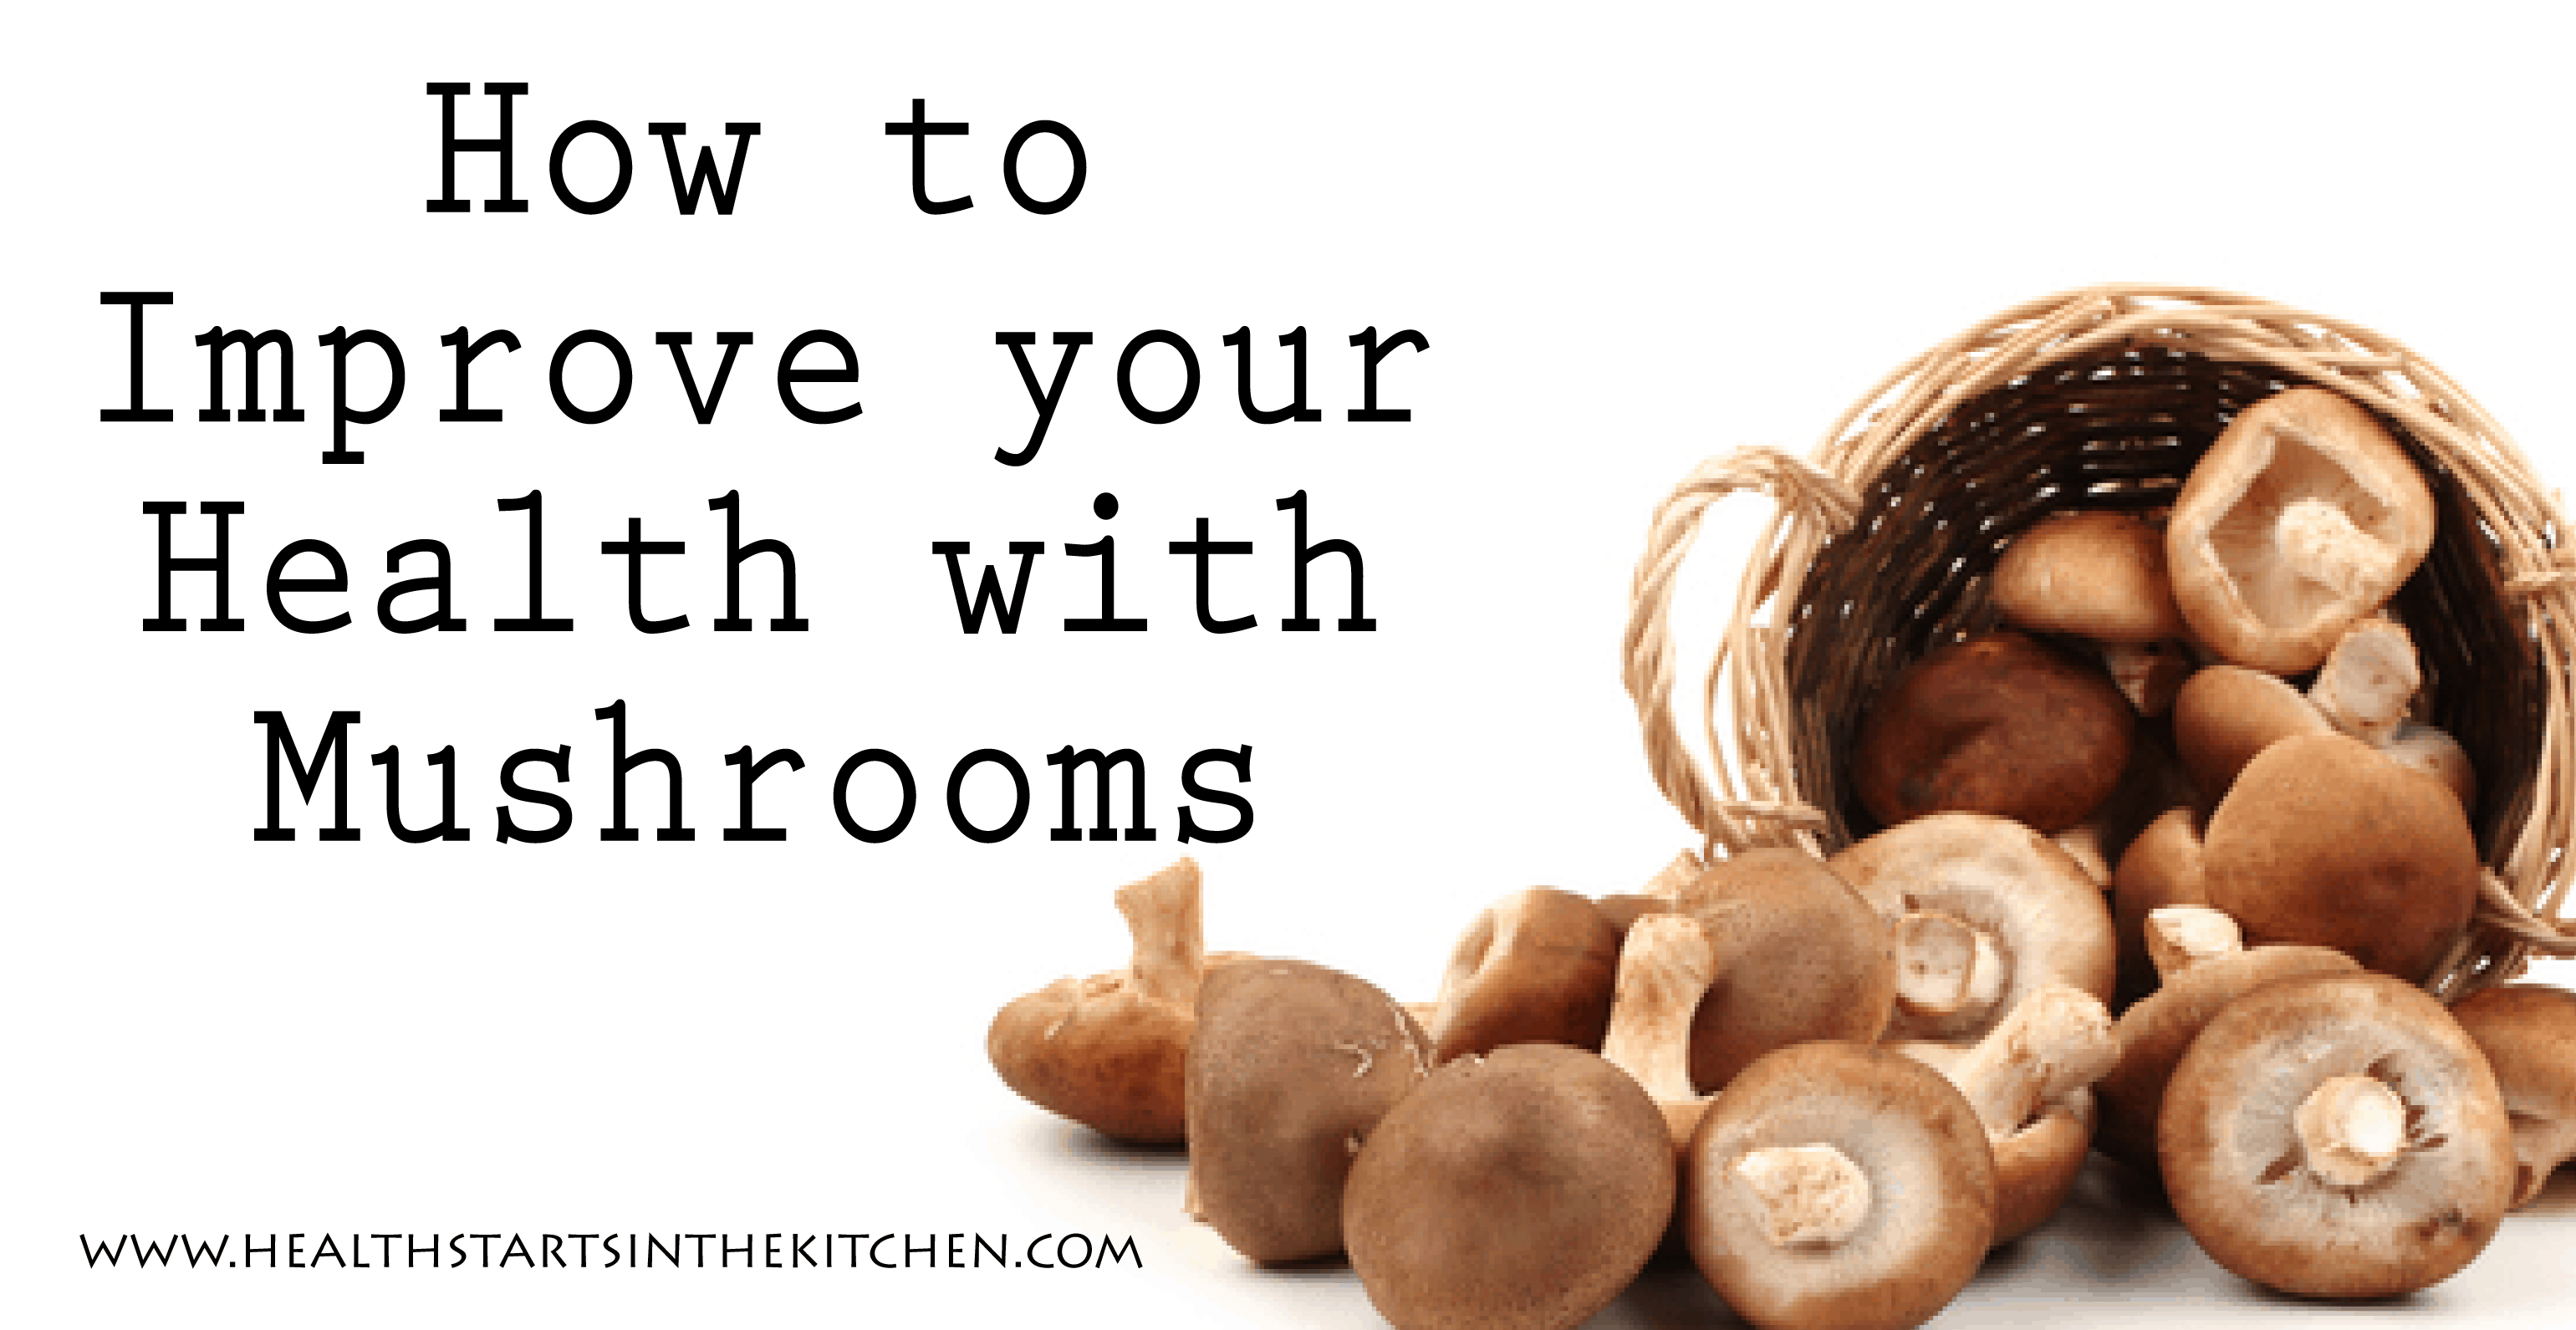 The Health Benefits of Mushroom Consumption